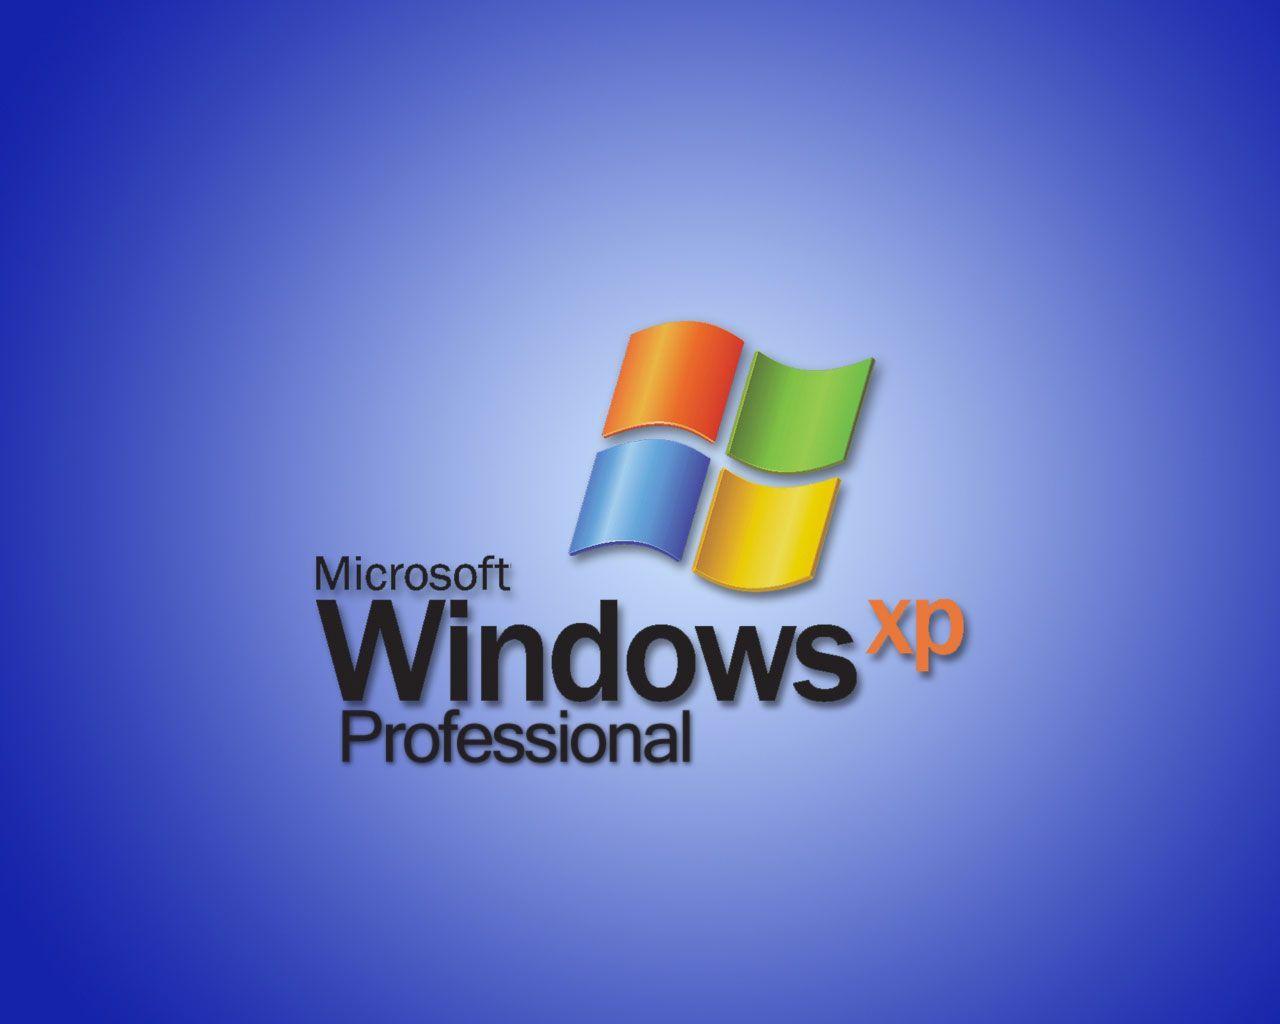 Windows xp pro wallpapers